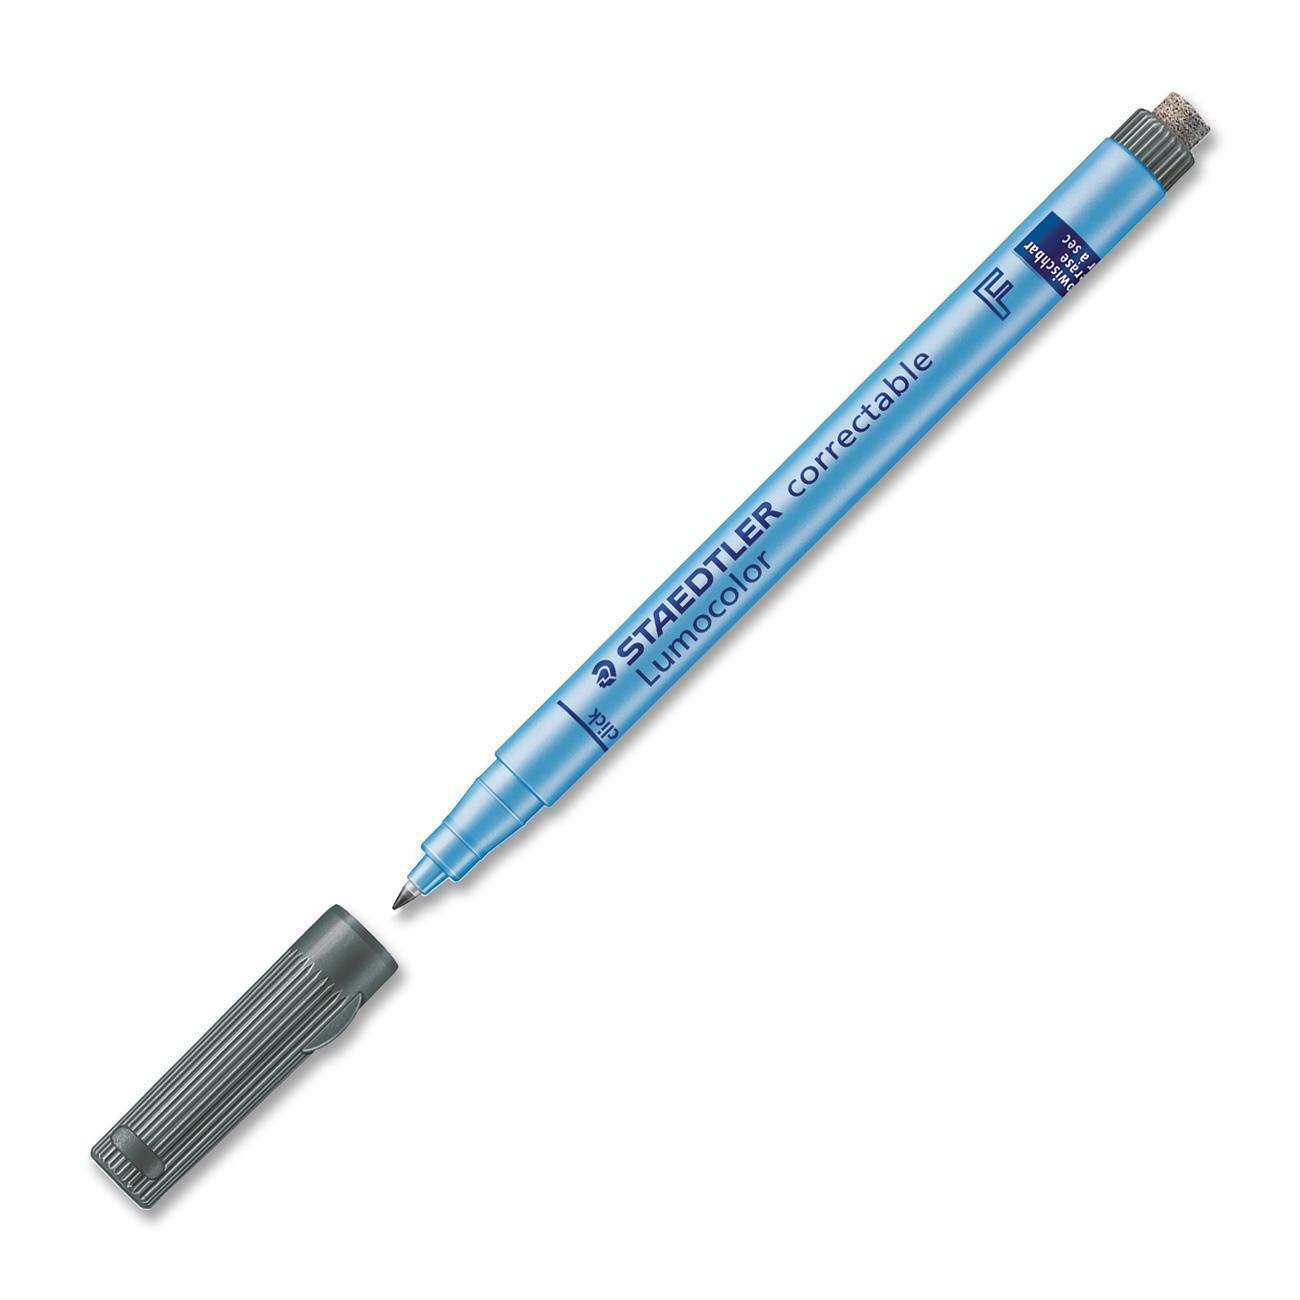 Lumocolor Dry Erase Marker